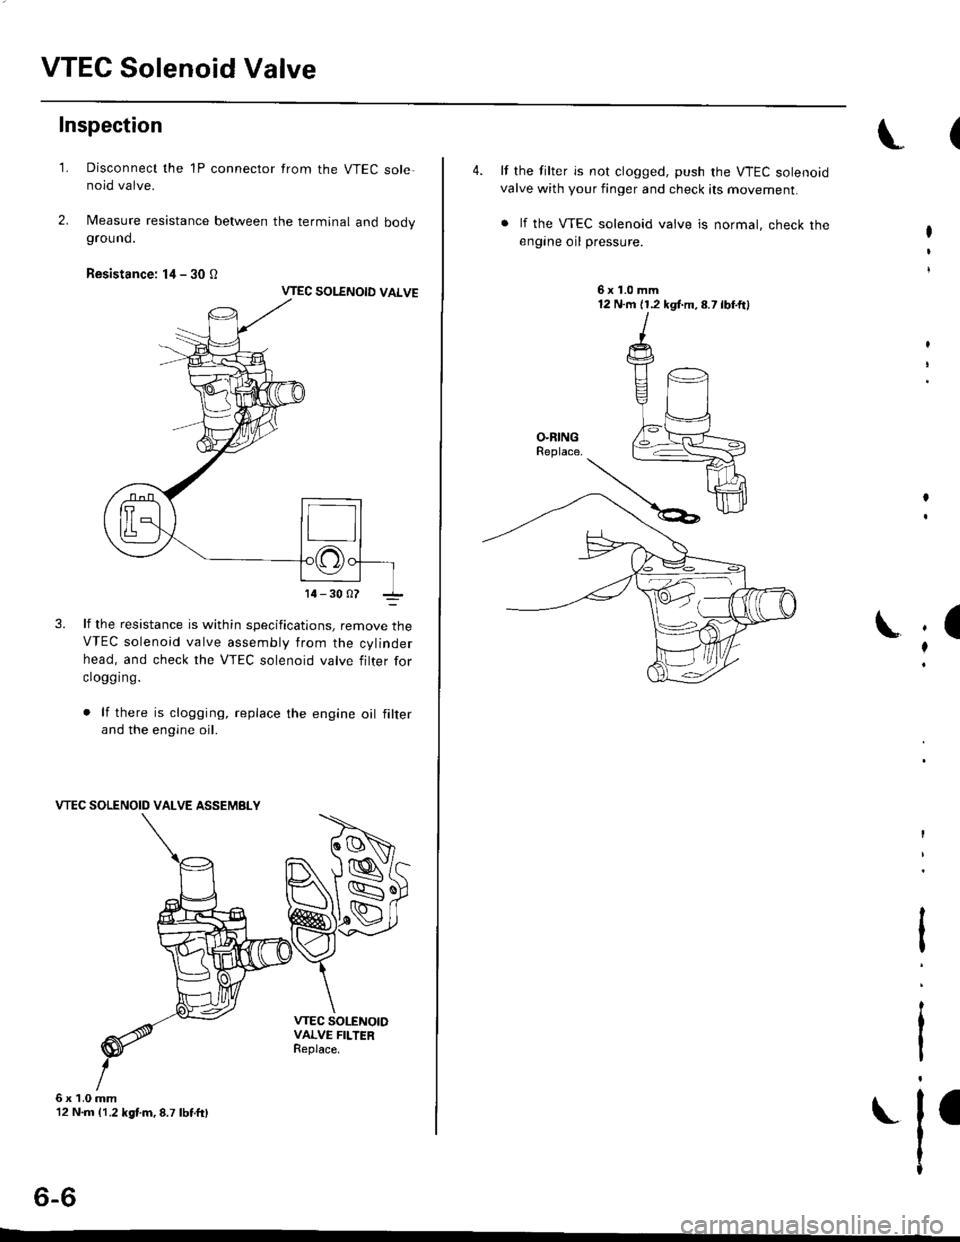 HONDA CIVIC 1996 6.G Workshop Manual VTEC Solenoid Valve
Inspection
1.
6x1.0mm12 N.m 11.2 kgf.m,8.7 lbtft)
Disconnect the 1P connector from the VTEC sole-noid valve.
Measure resistance between the terminal and bodyground.
Resistance: l4 